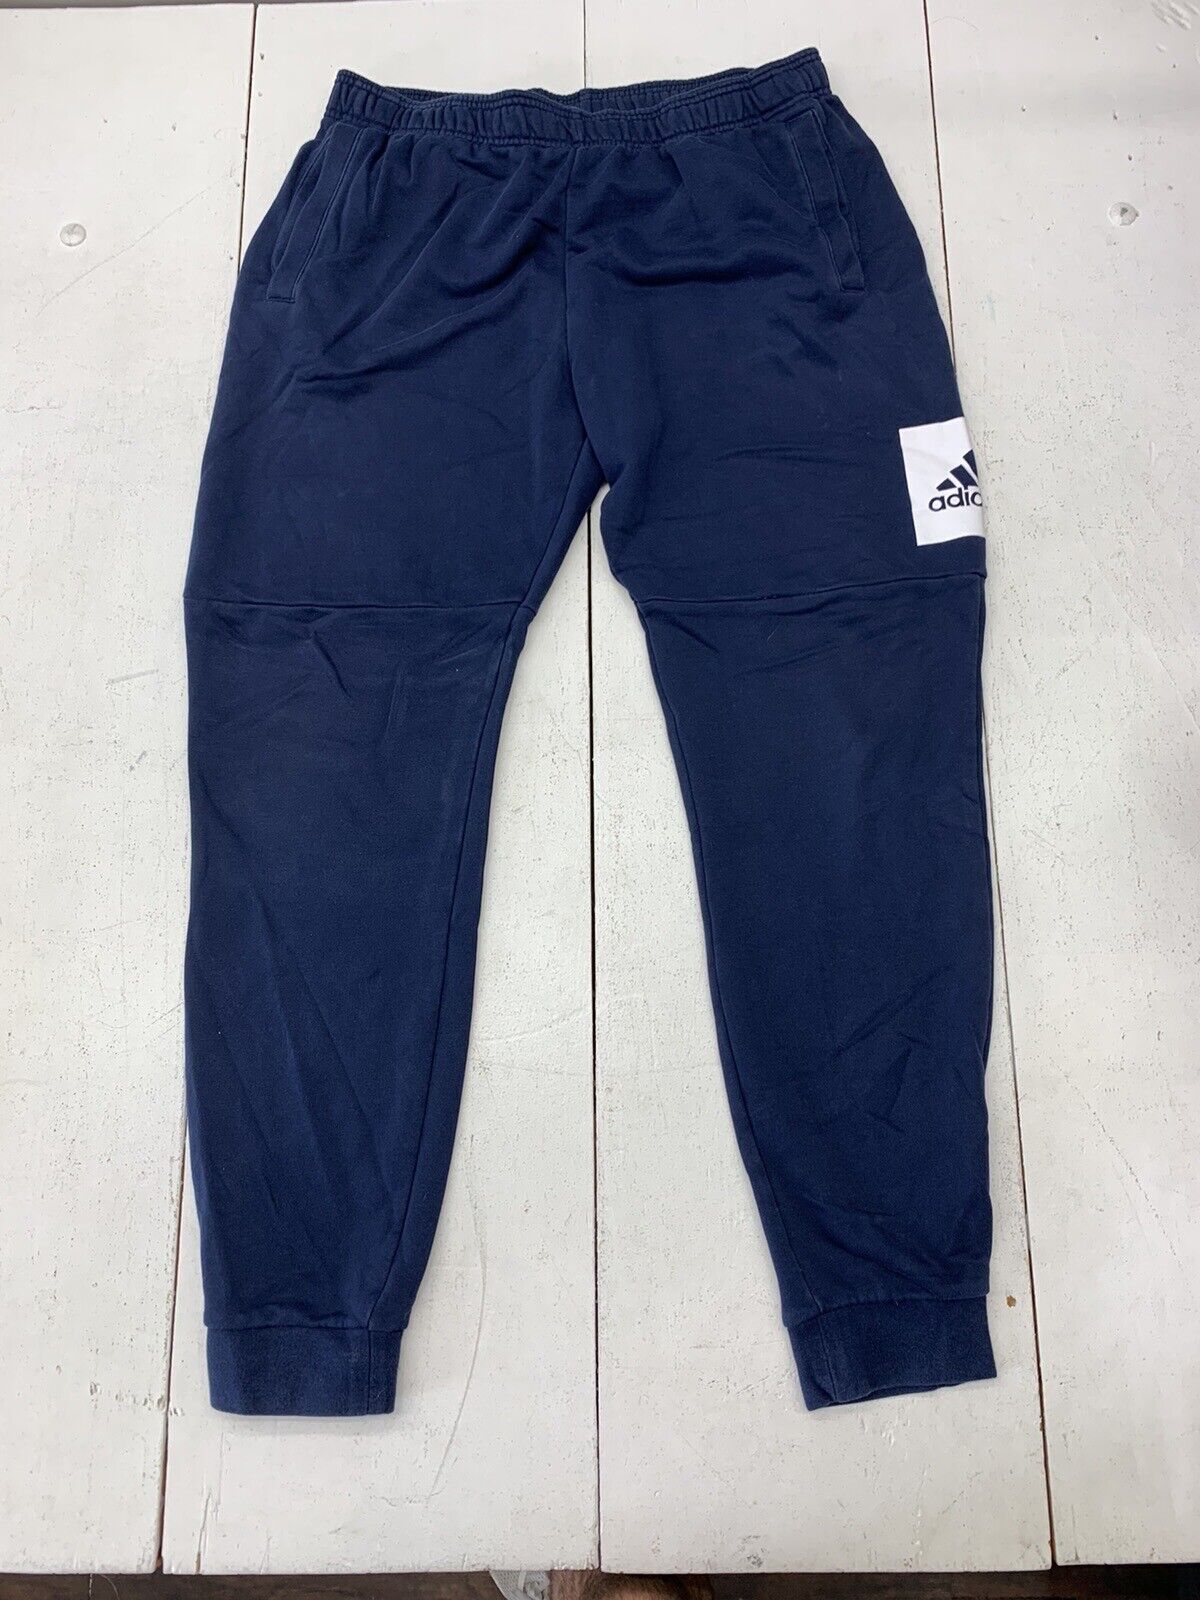 Adidas Mens Dark Blue Sweat Pants Size XL - beyond exchange